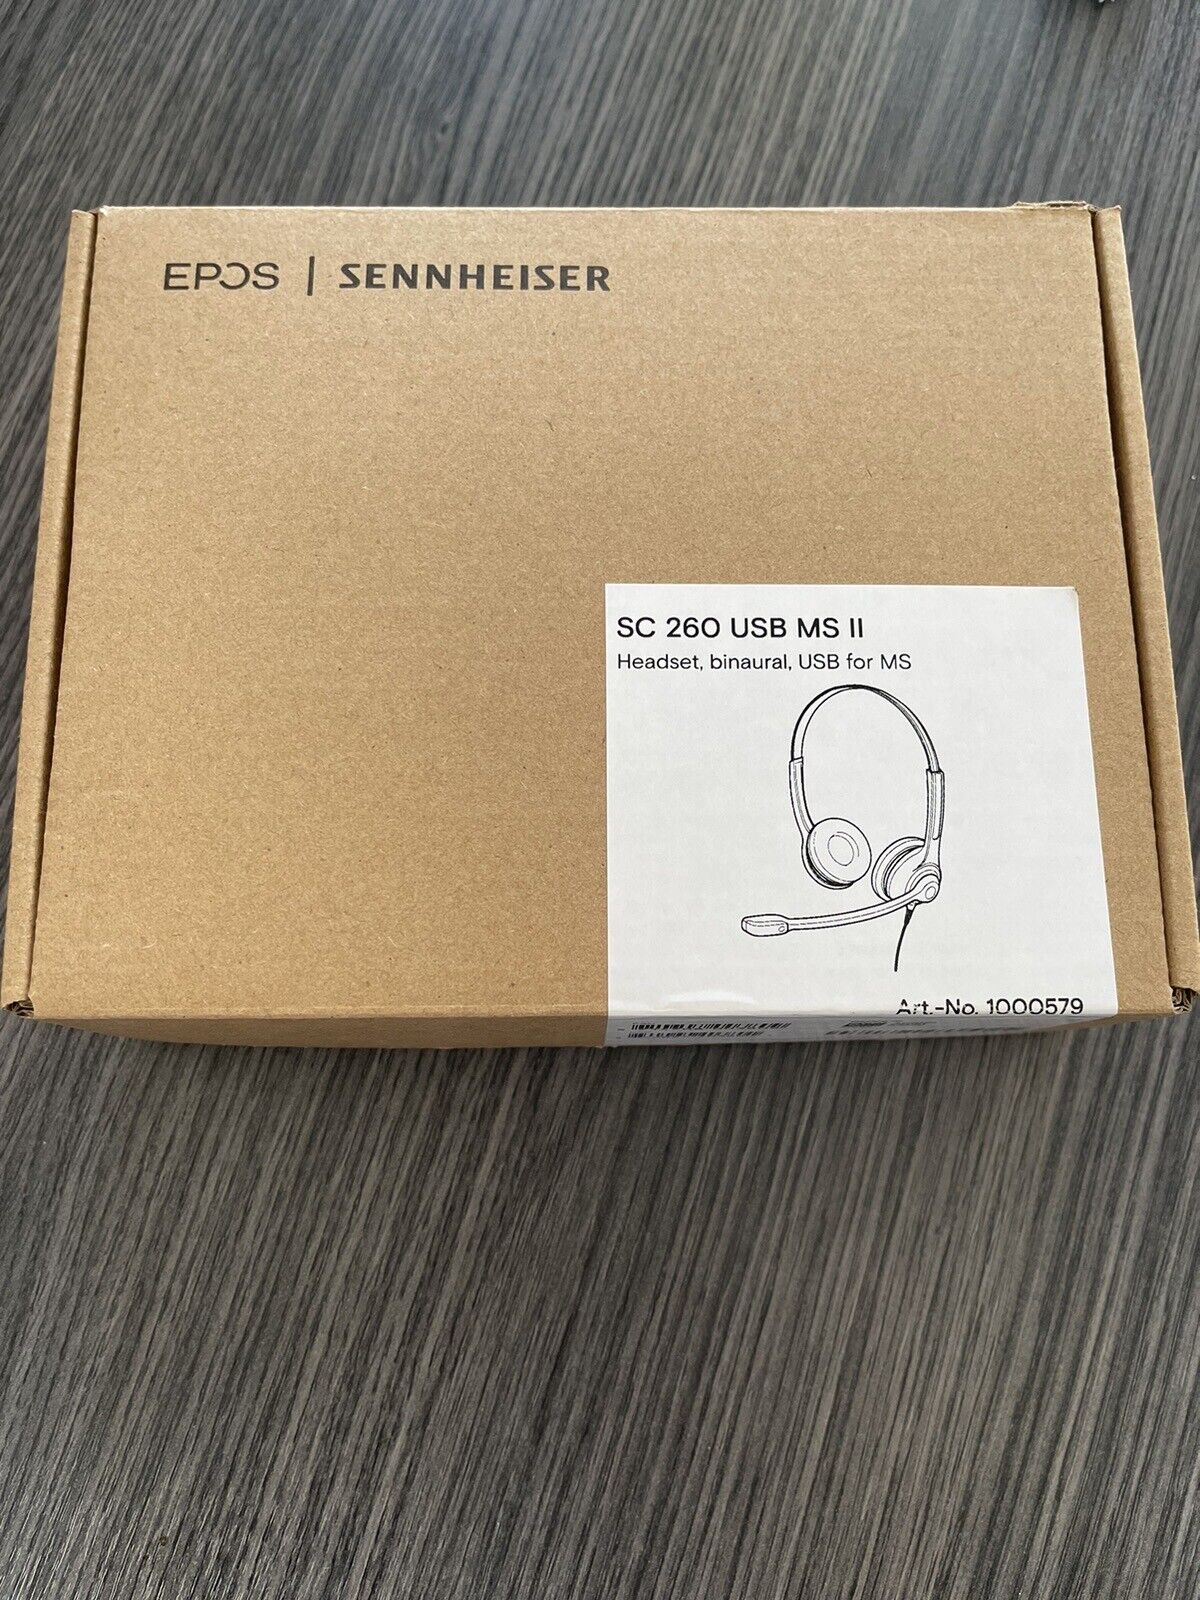 Epos Sennheiser SC 260 USB MS II Headset 1000579